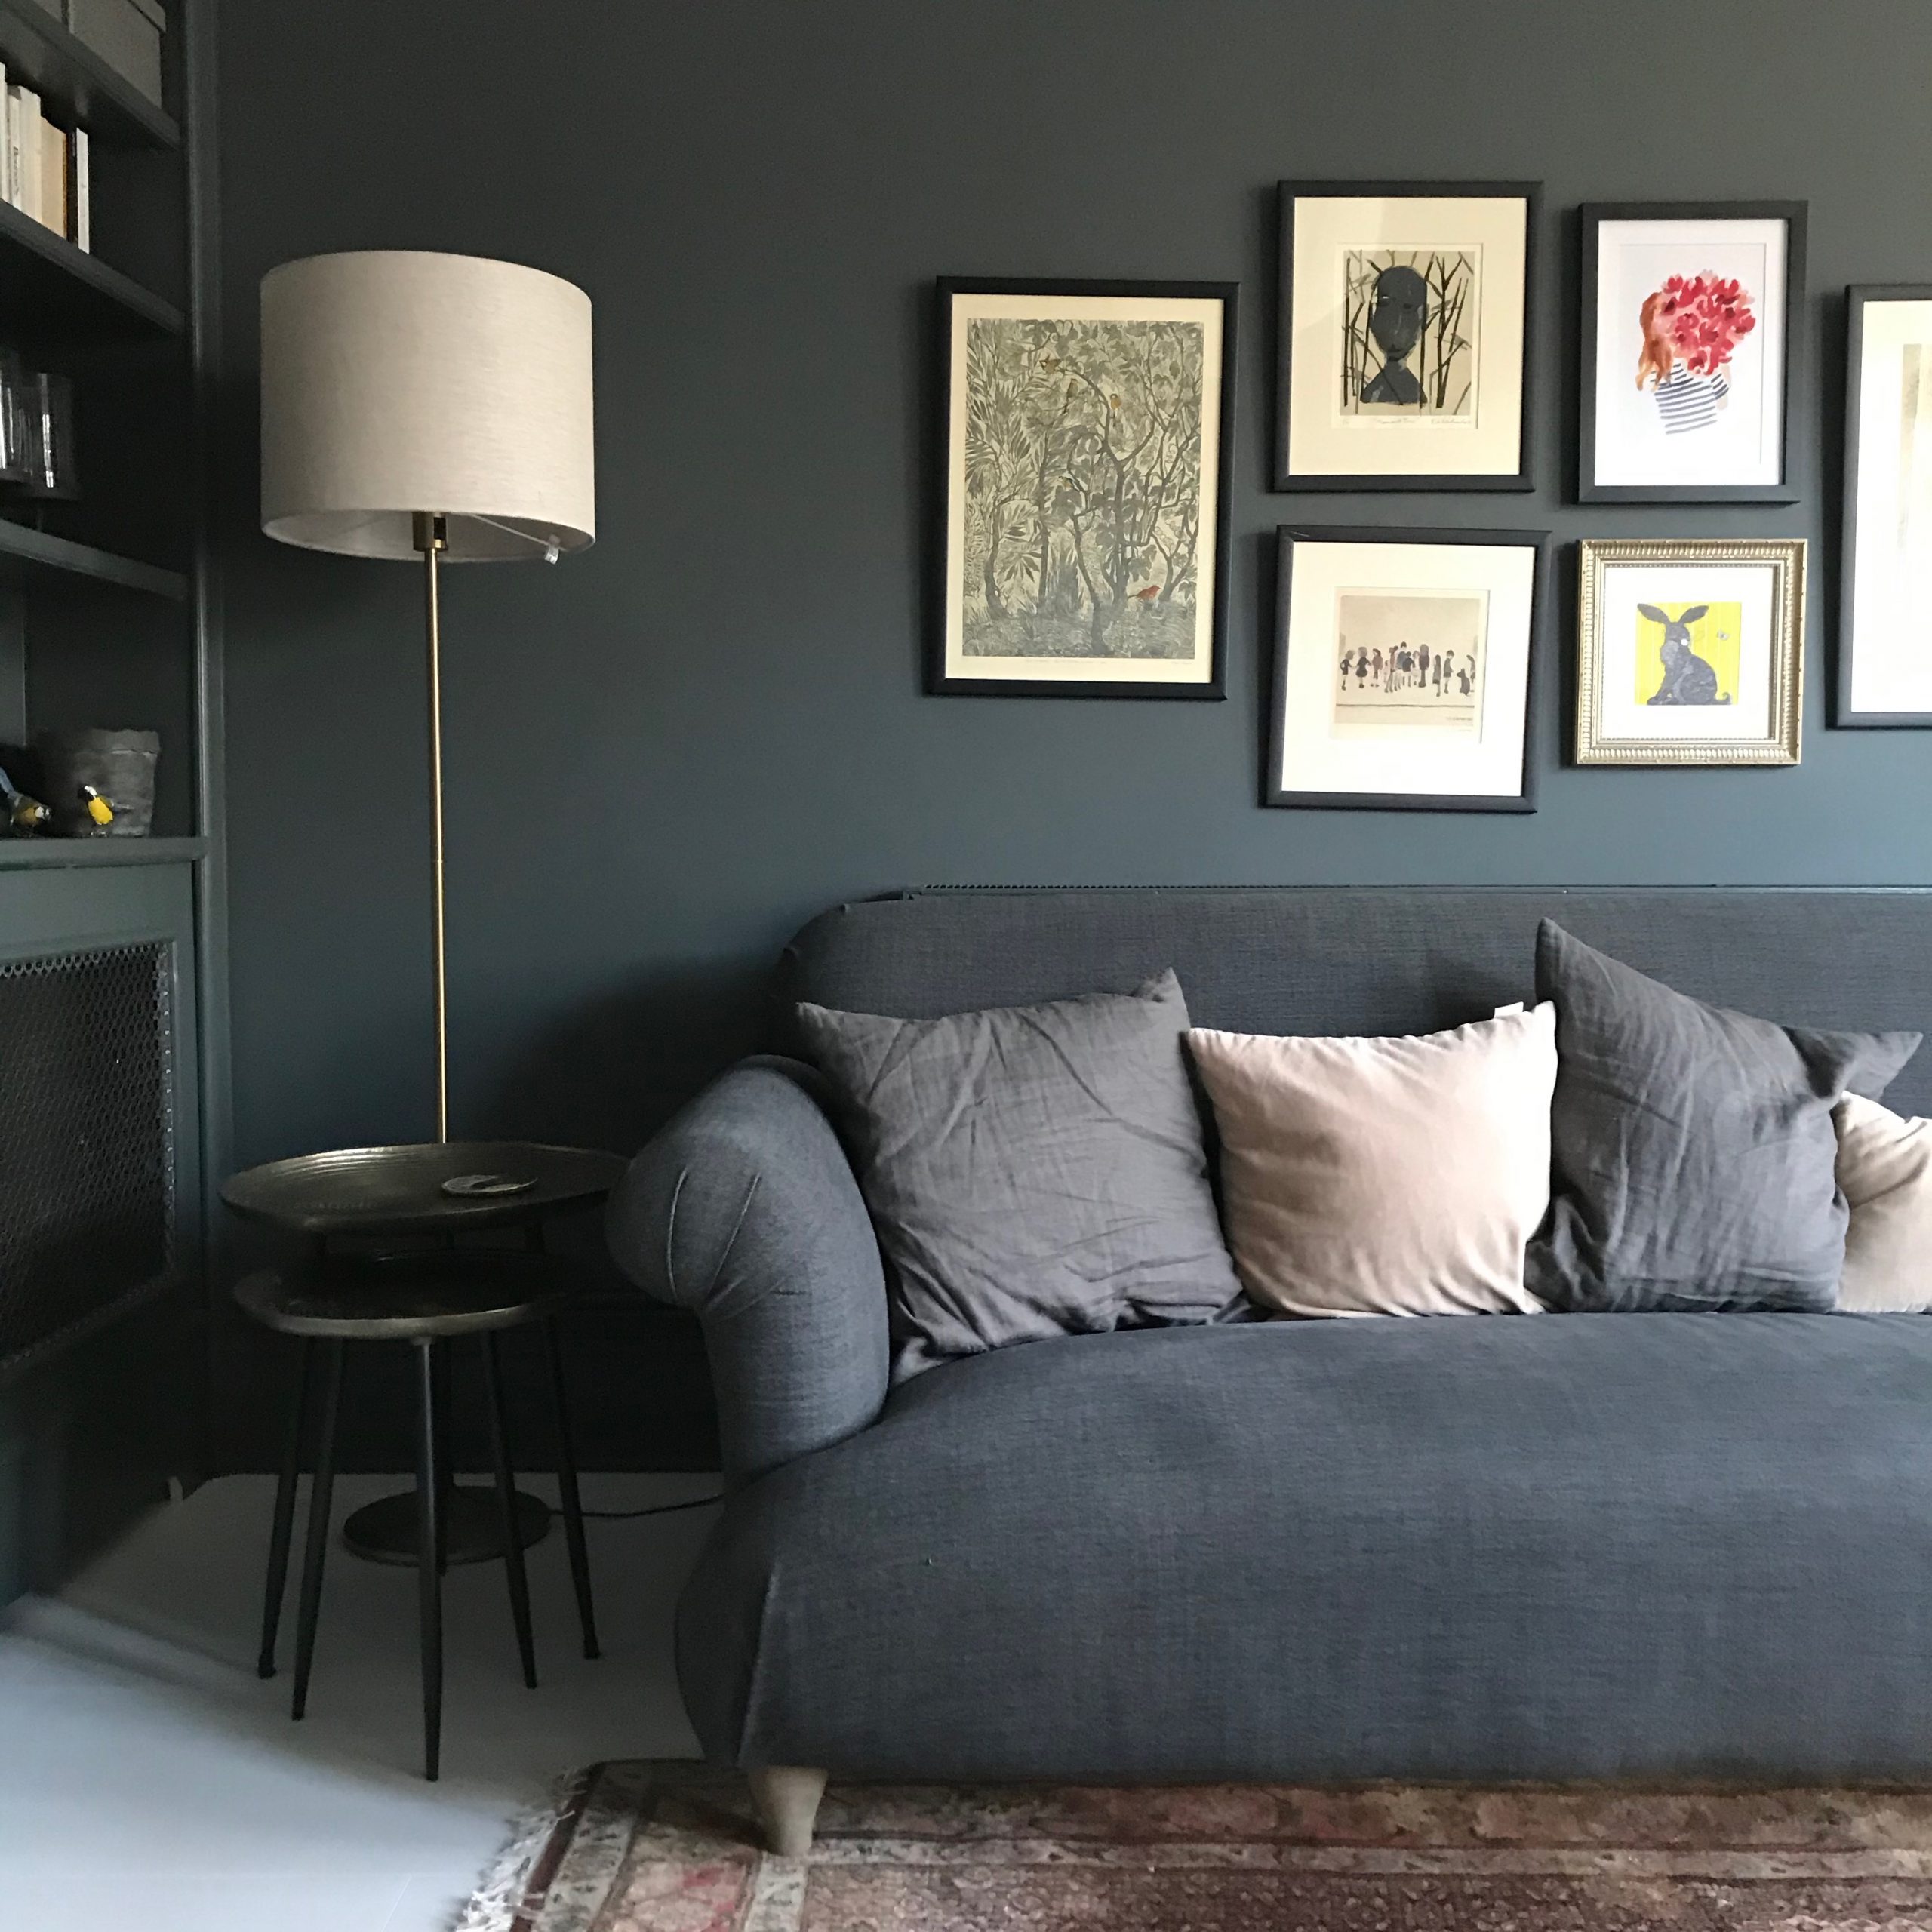 How to arrange cushions on a corner sofa? – The World in Cushions